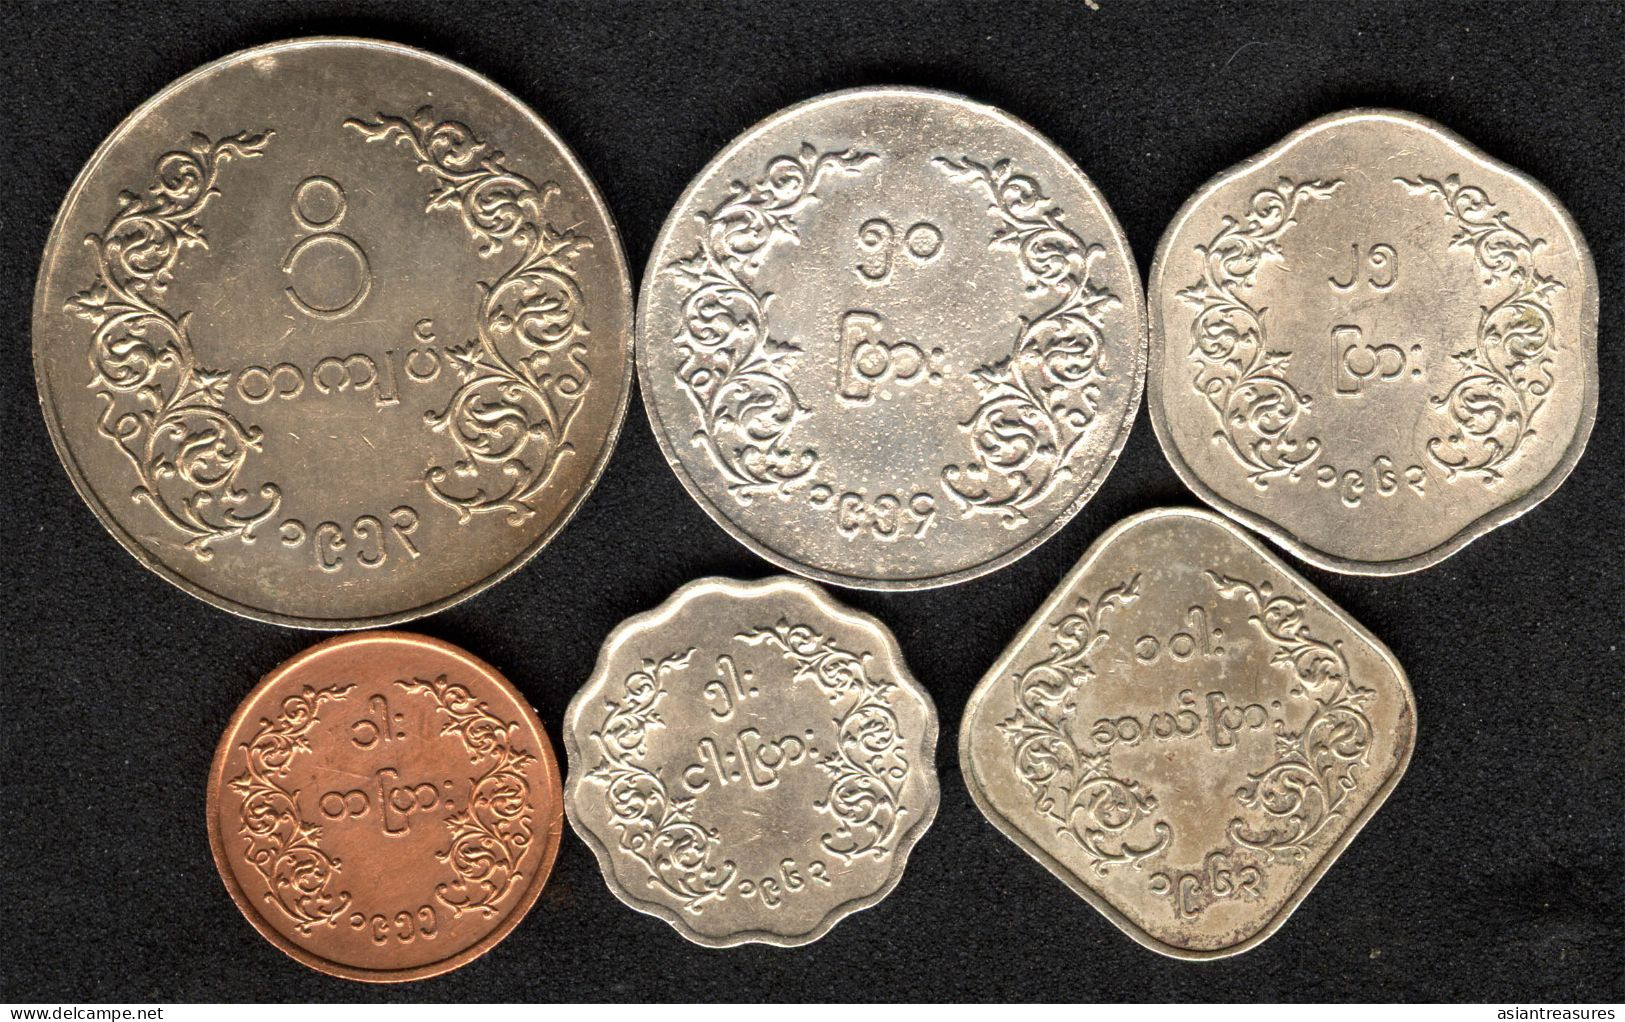 Nice Set Of Burmese Coins, Pre-Myanmar 20 Coin Set In Nice Condition - Autres – Asie